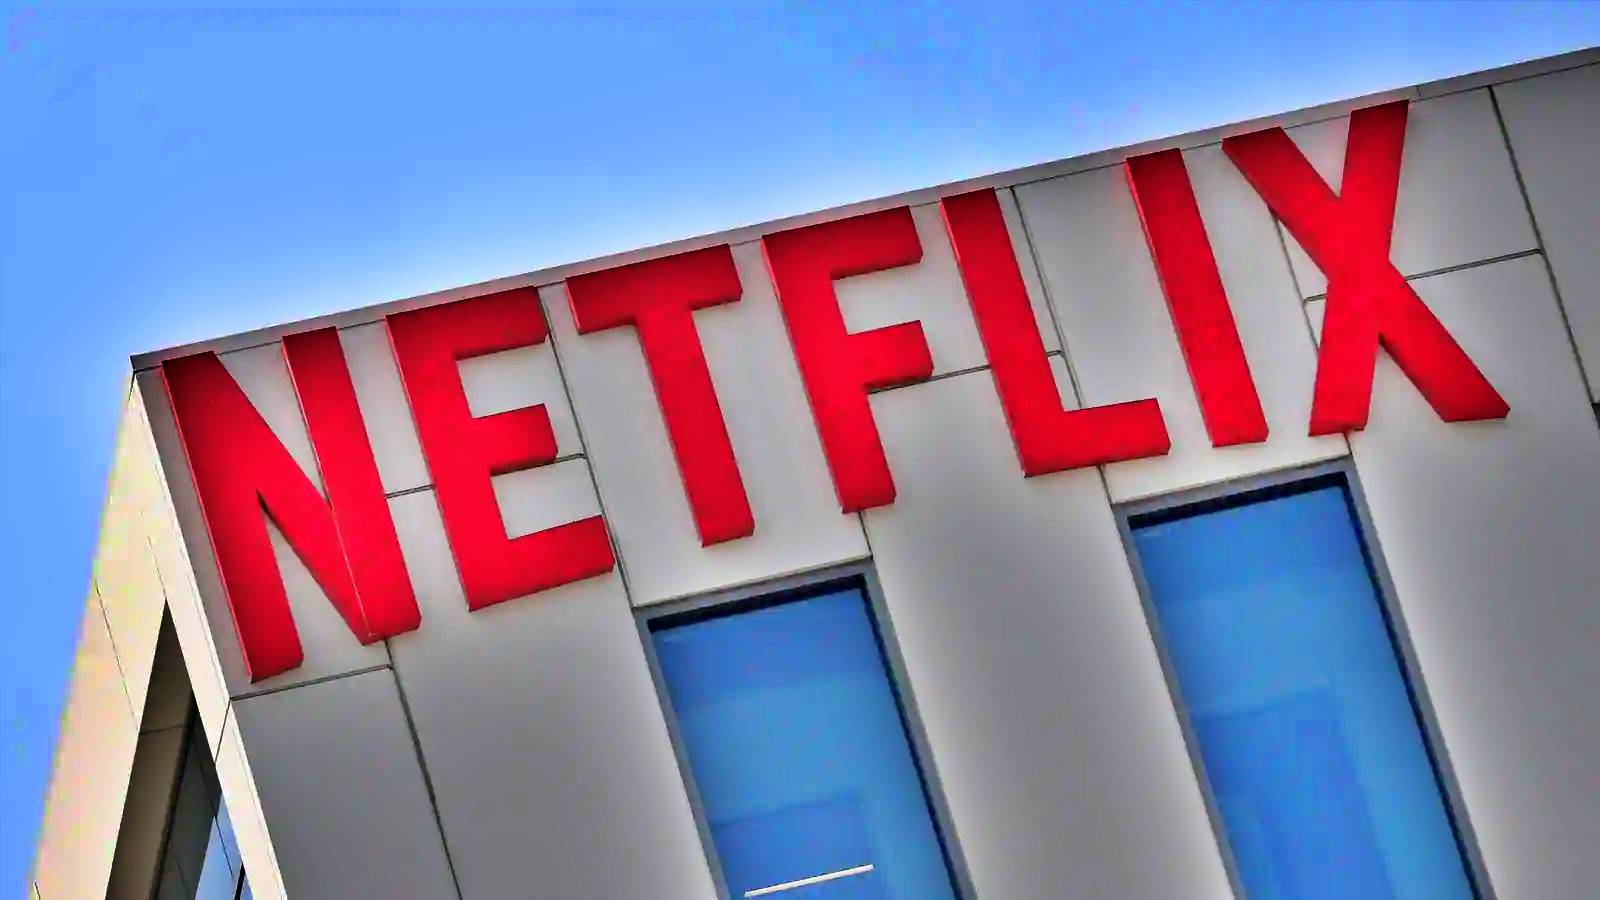 VERRASSING Netflix-aankondiging GROOT belang Roemenië